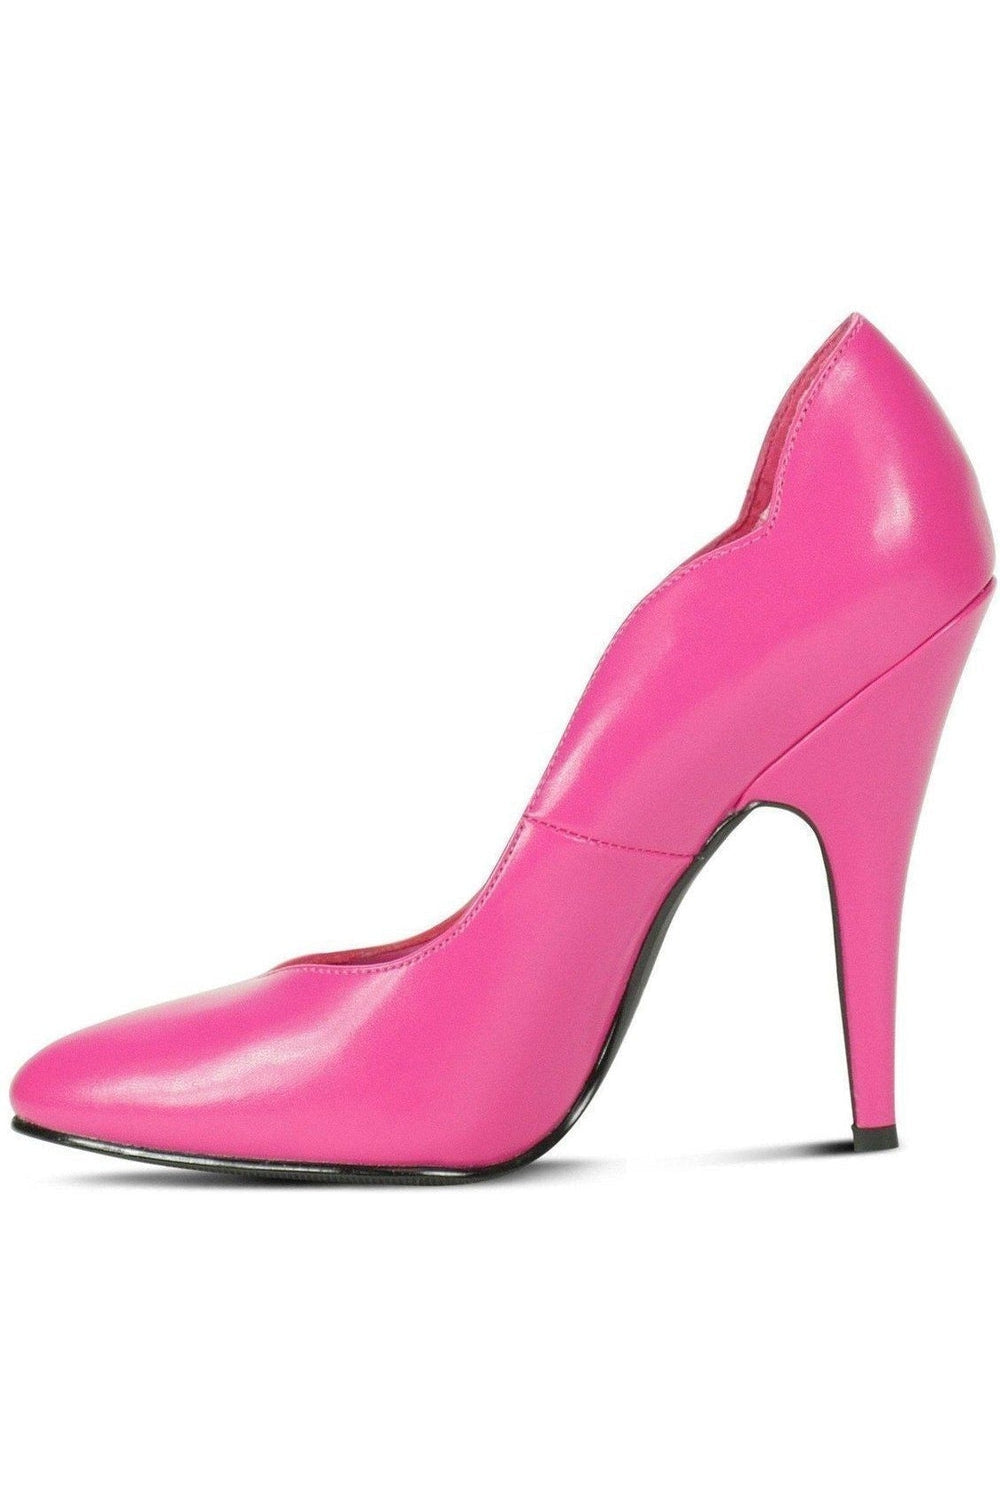 Fashion Pump-Fuchsia-Sexyshoes Brand-Pumps-SEXYSHOES.COM